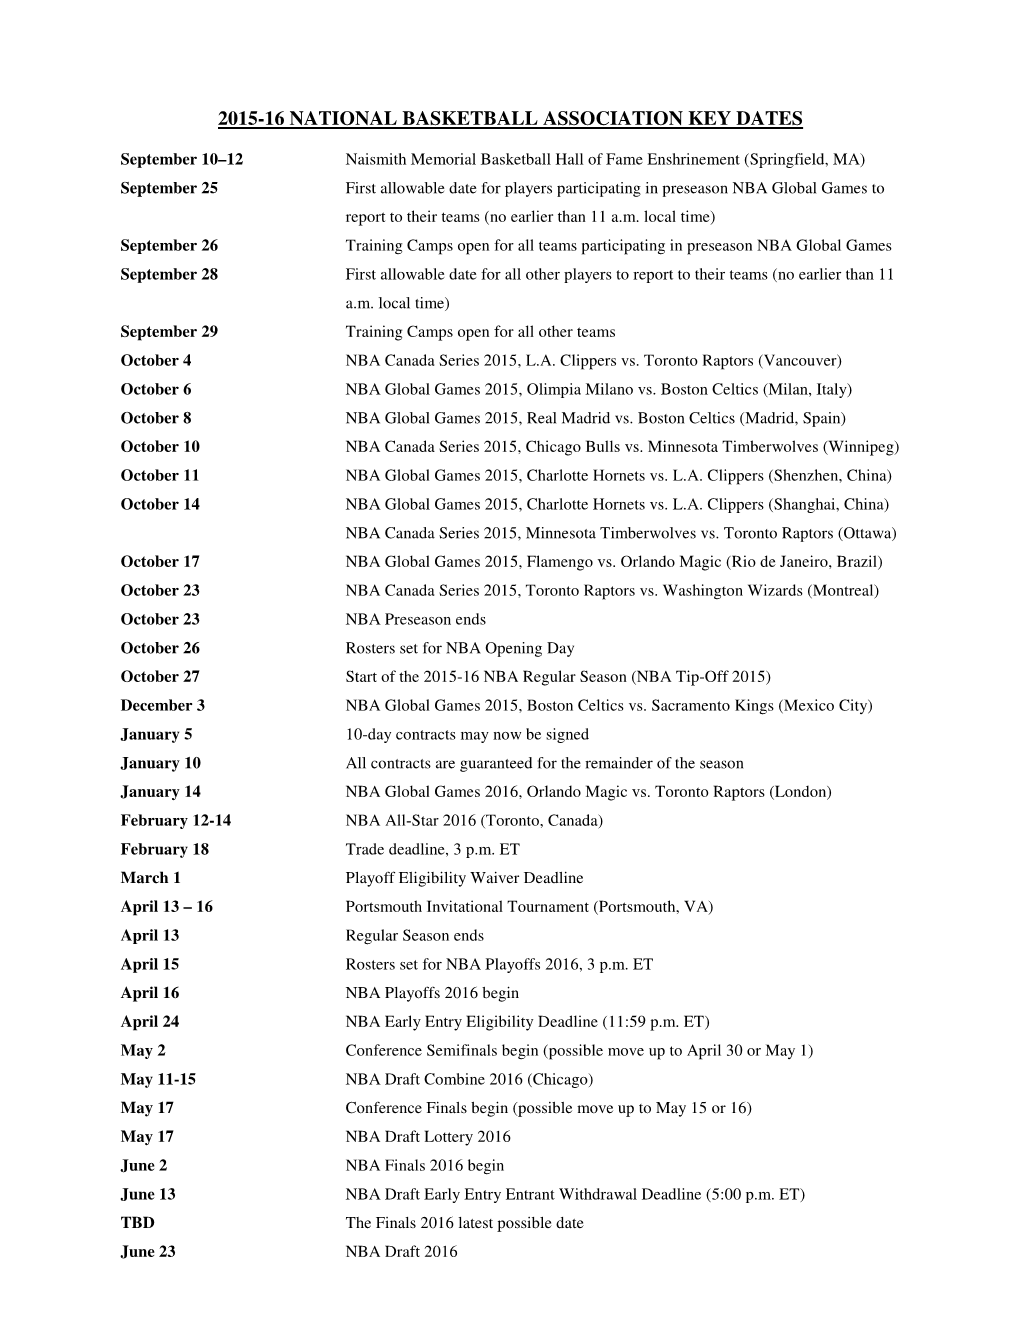 2015-16 National Basketball Association Key Dates